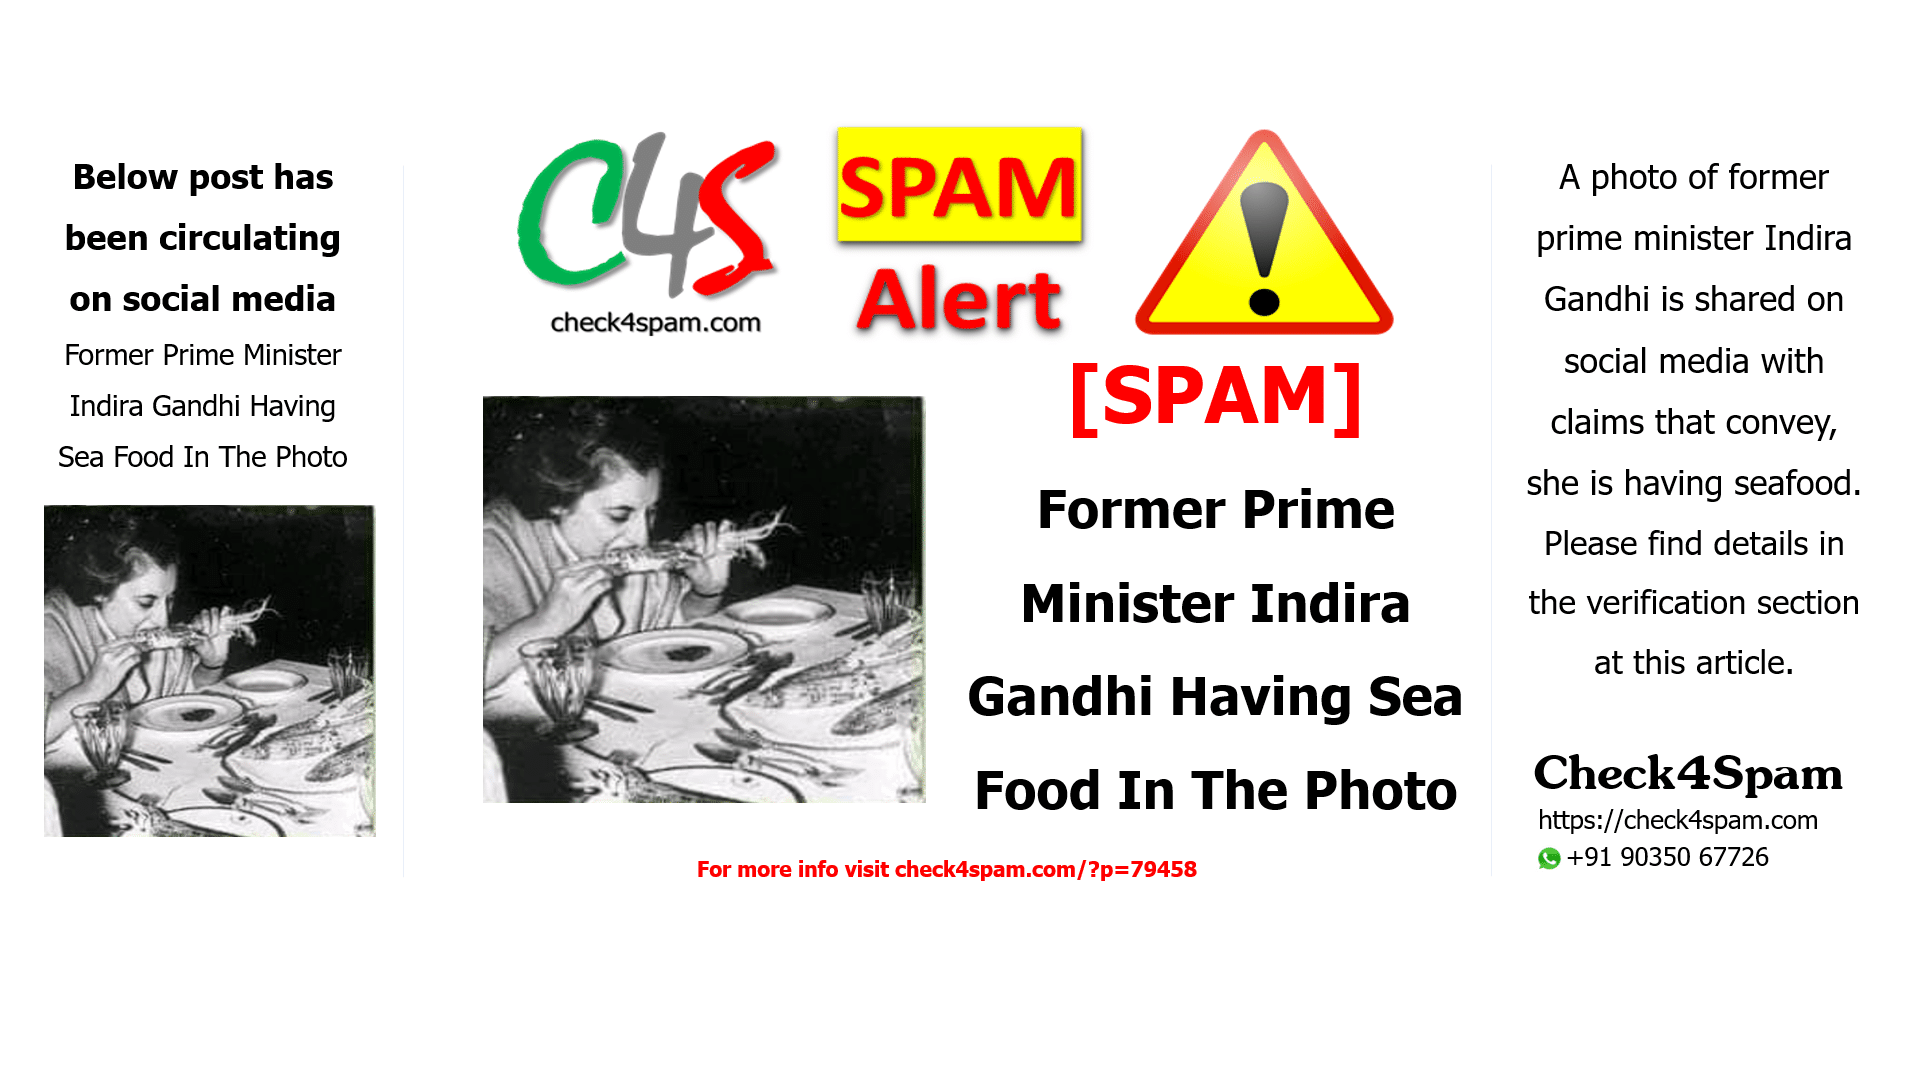 Former Prime Minister Indira Gandhi Having Sea Food In The Photo